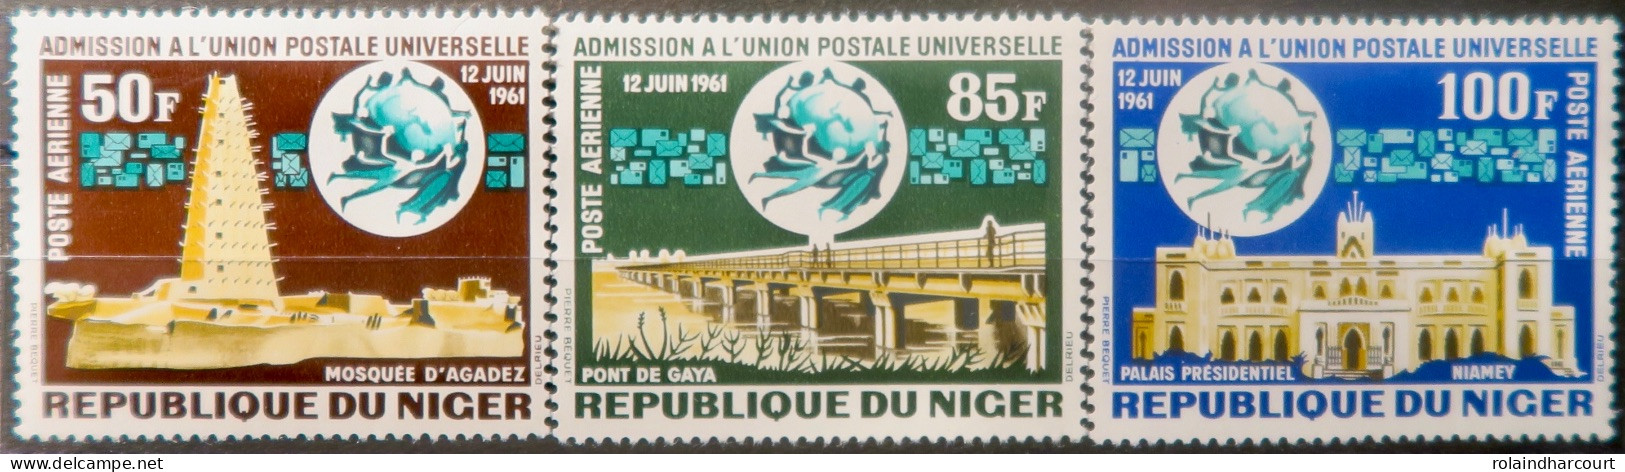 LP3844/2282 - NIGER - 1963 - POSTE AERIENNE - SERIE COMPLETE - N°23 à 25 NEUFS* - Níger (1960-...)